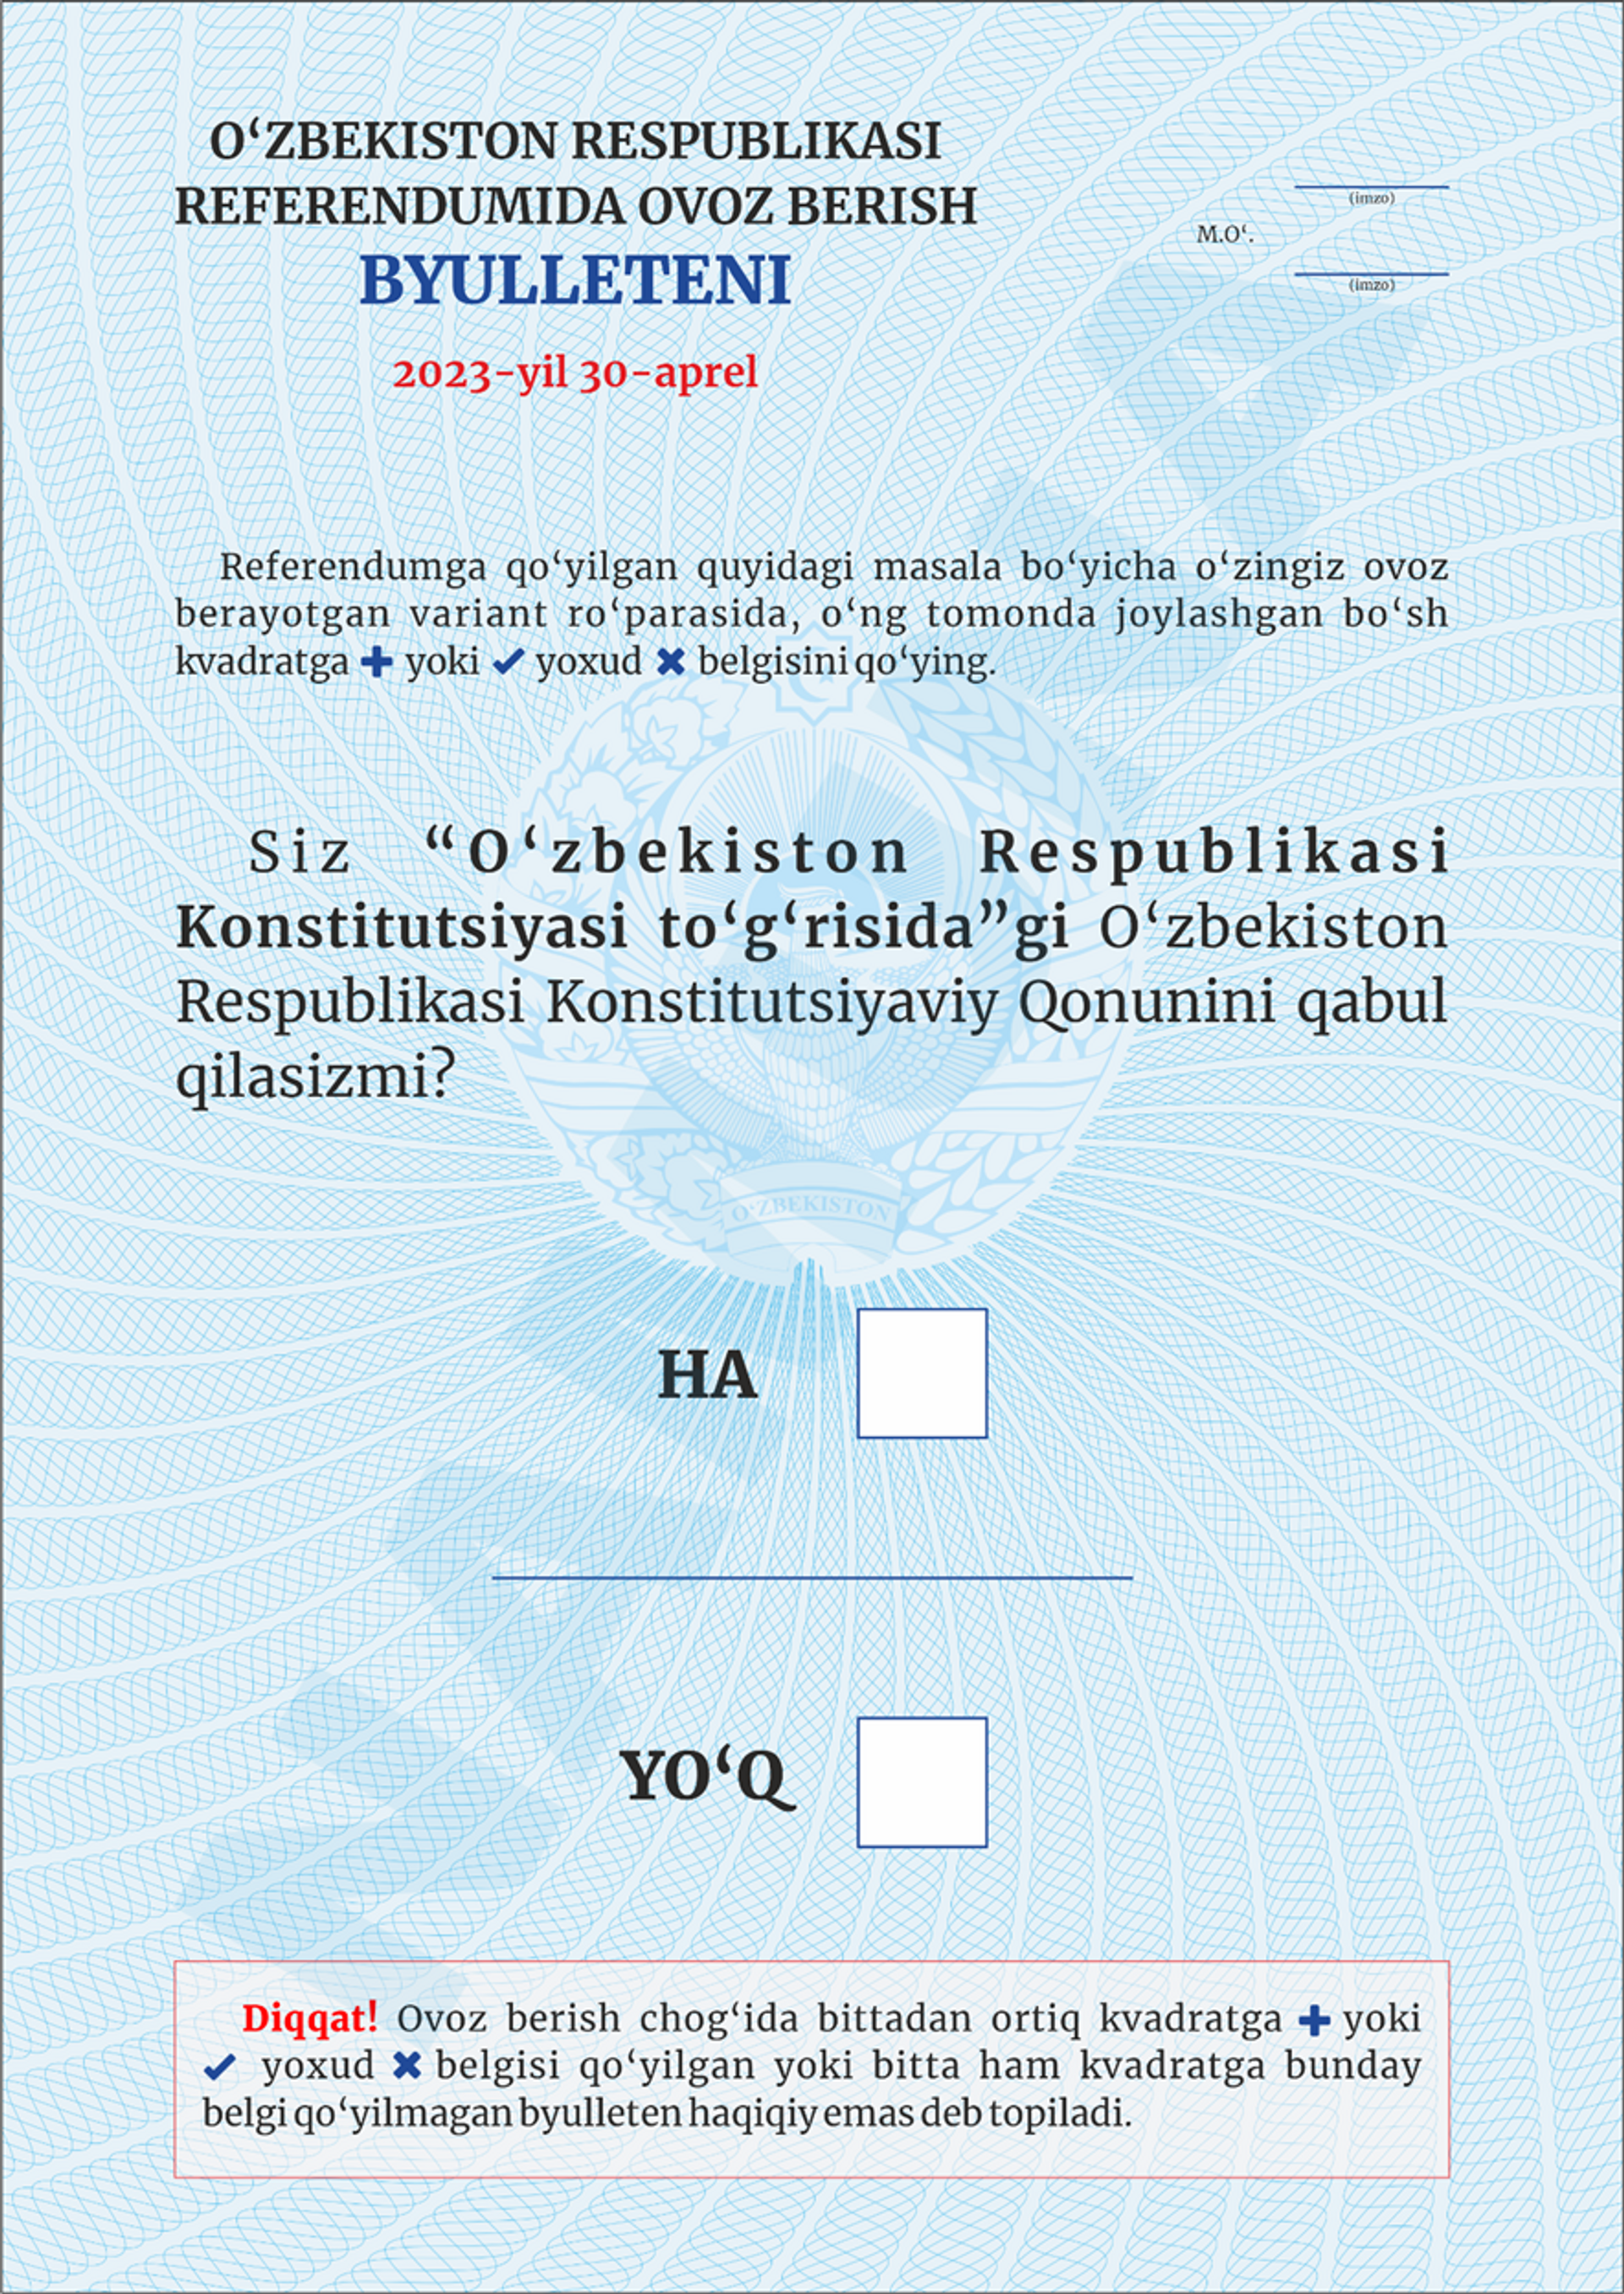 Референдум бюллетени, 30 апрель - Sputnik Ўзбекистон, 1920, 05.04.2023